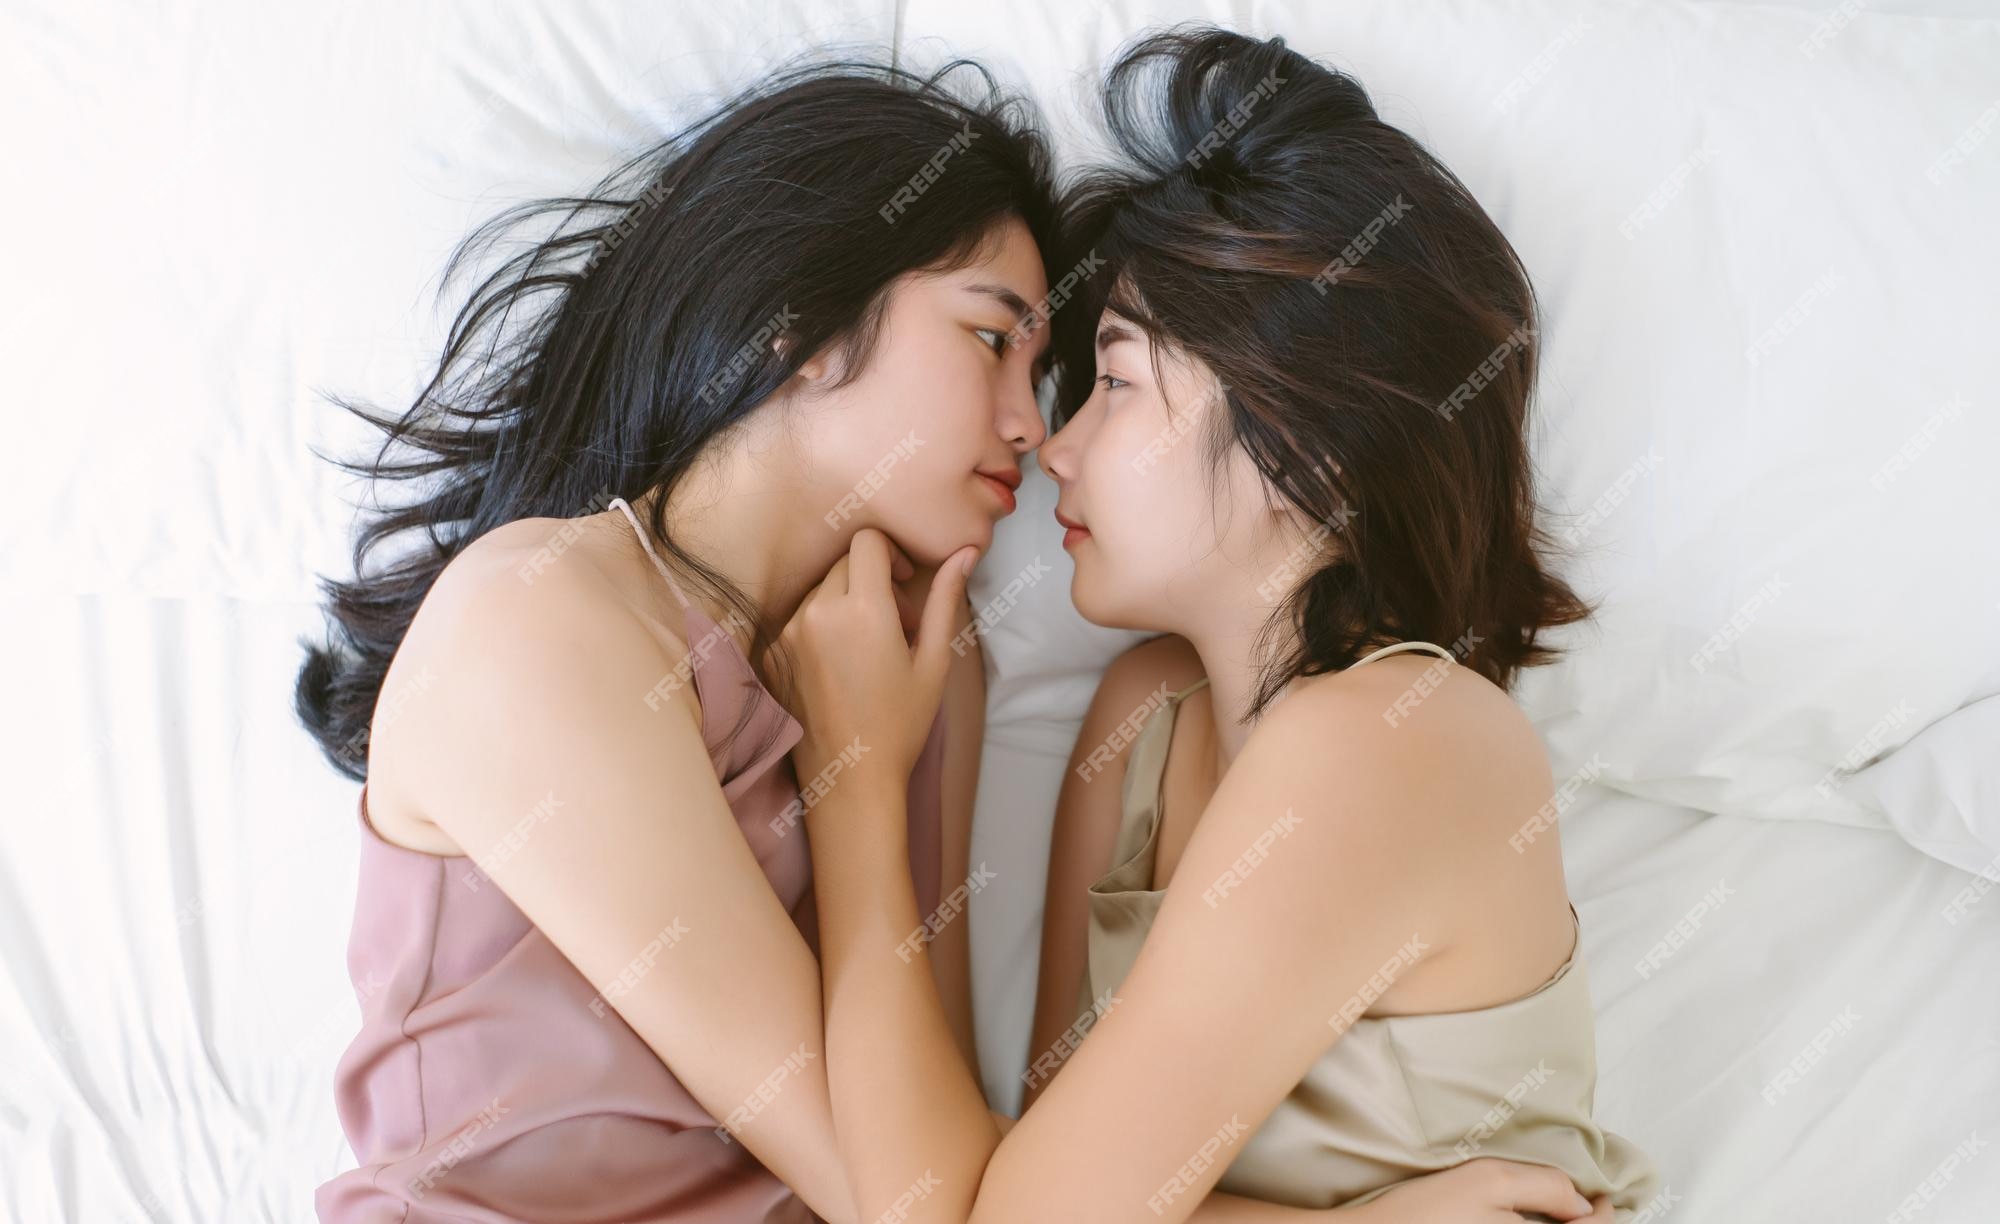 amy duzan recommends asian lesbians kissing videos pic